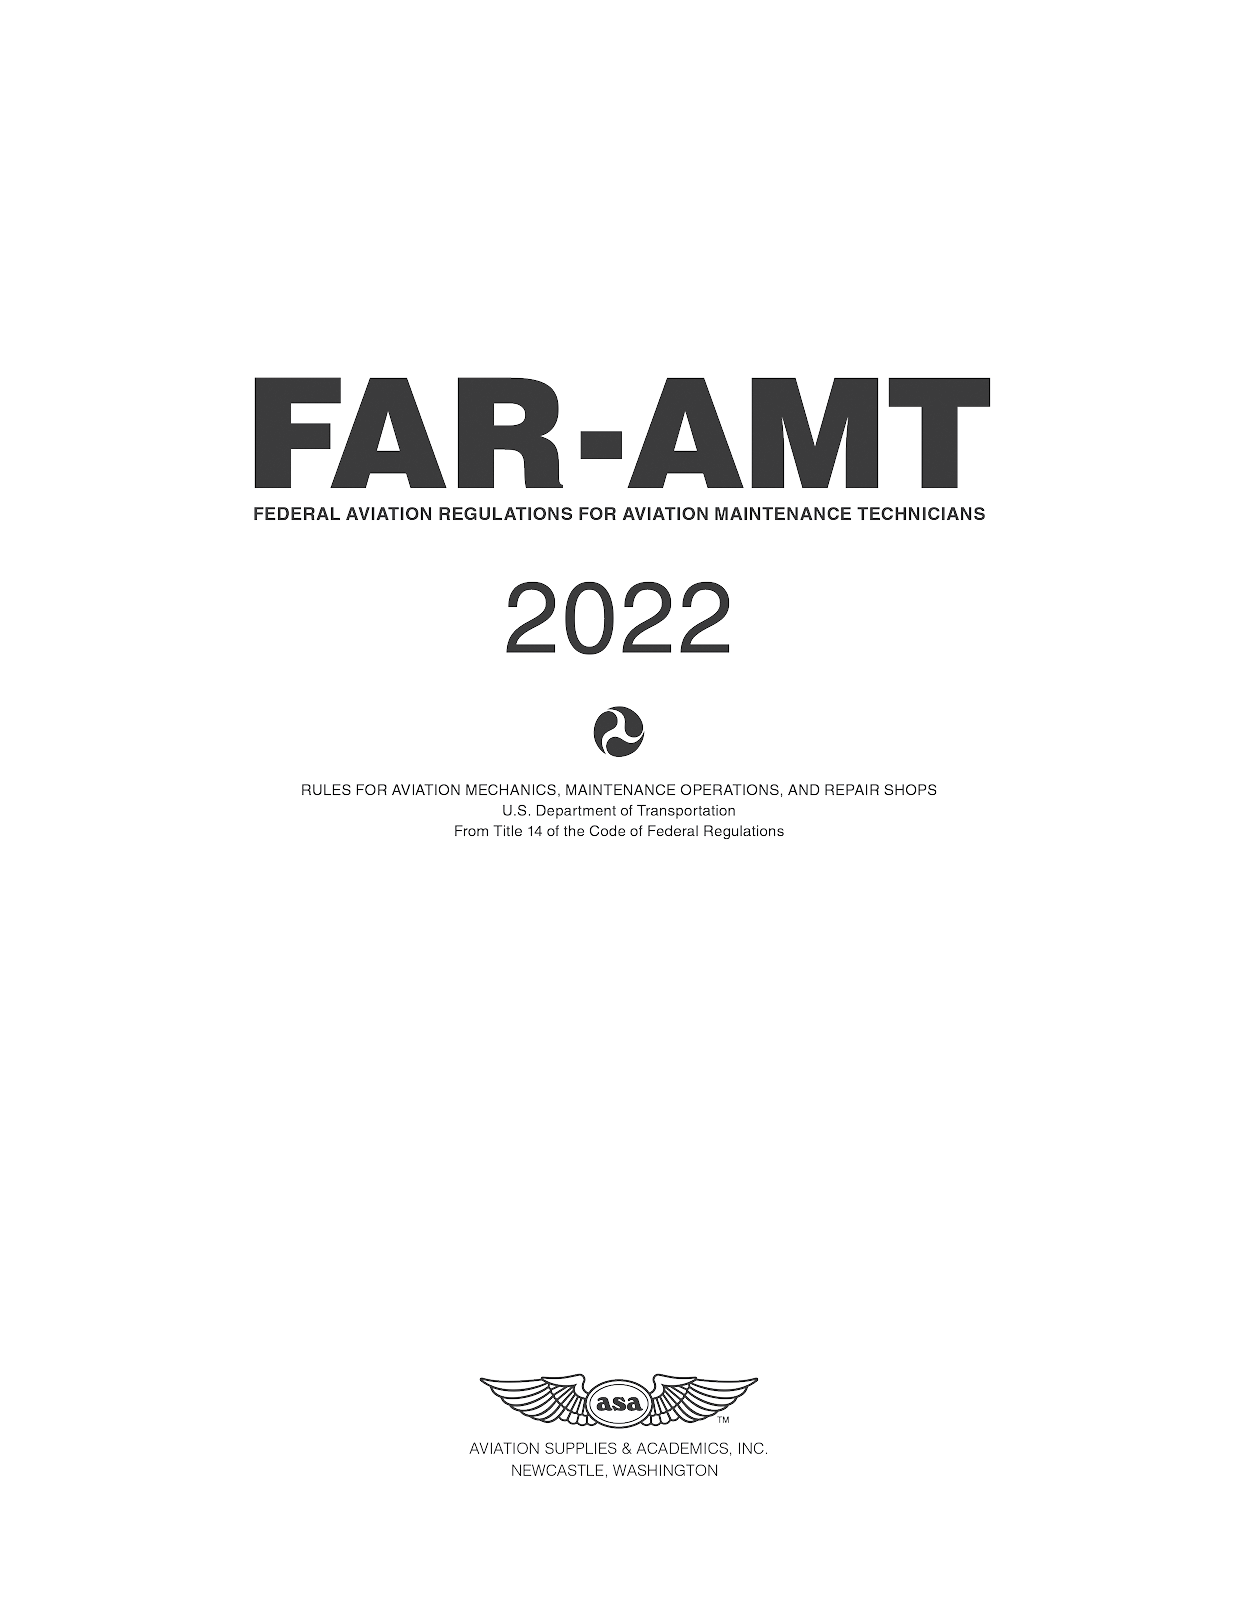 FAR-AMT Federal Aviation Regulations for Aviation Maintenance Technicians - photo 2